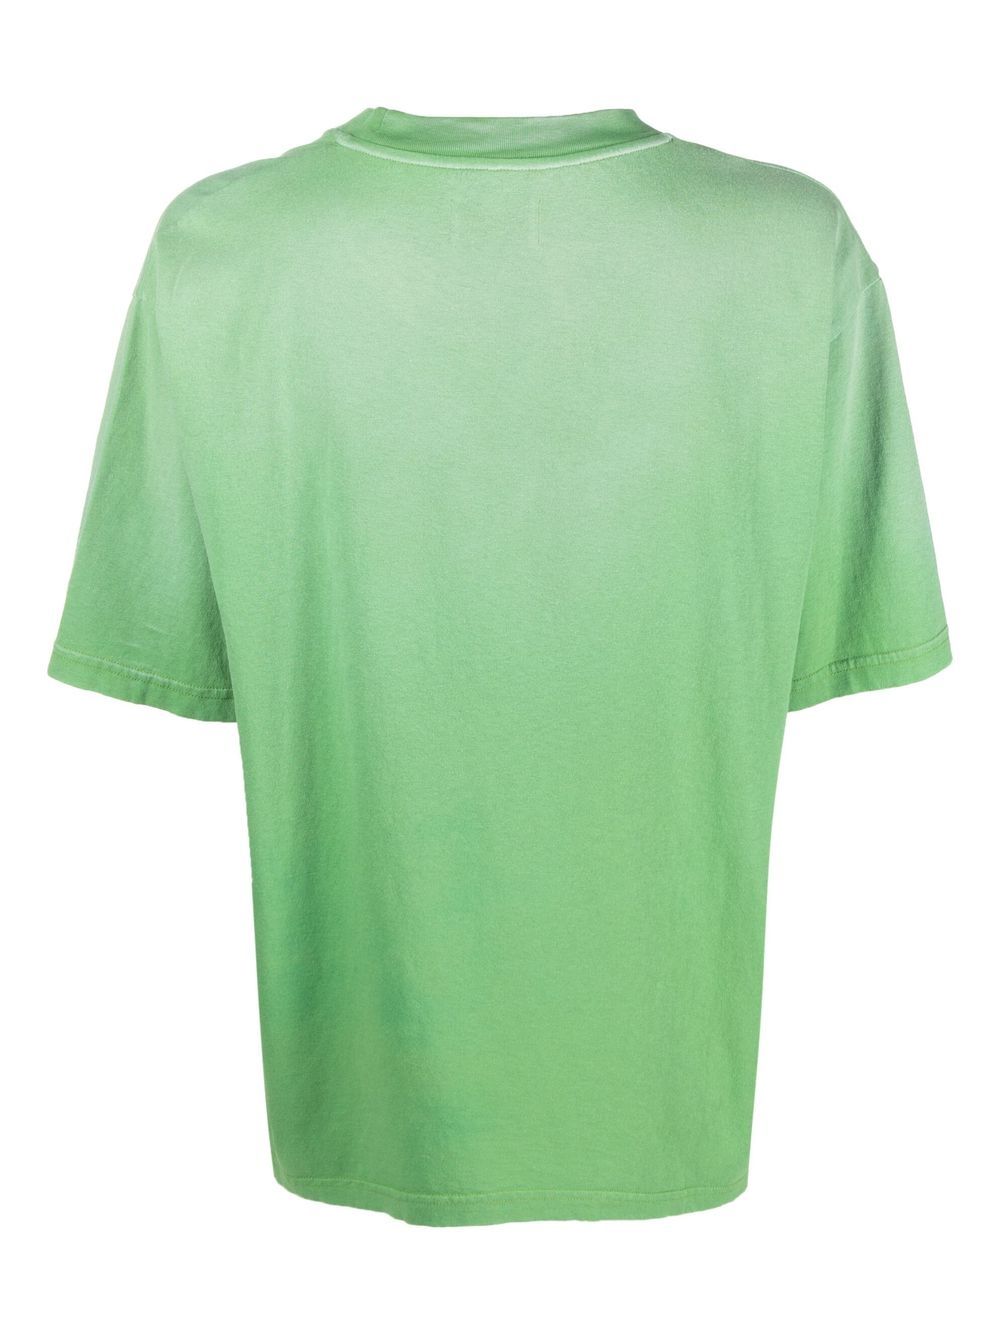 AARON Short sleeves T-Shirt - APPLE SPRAY